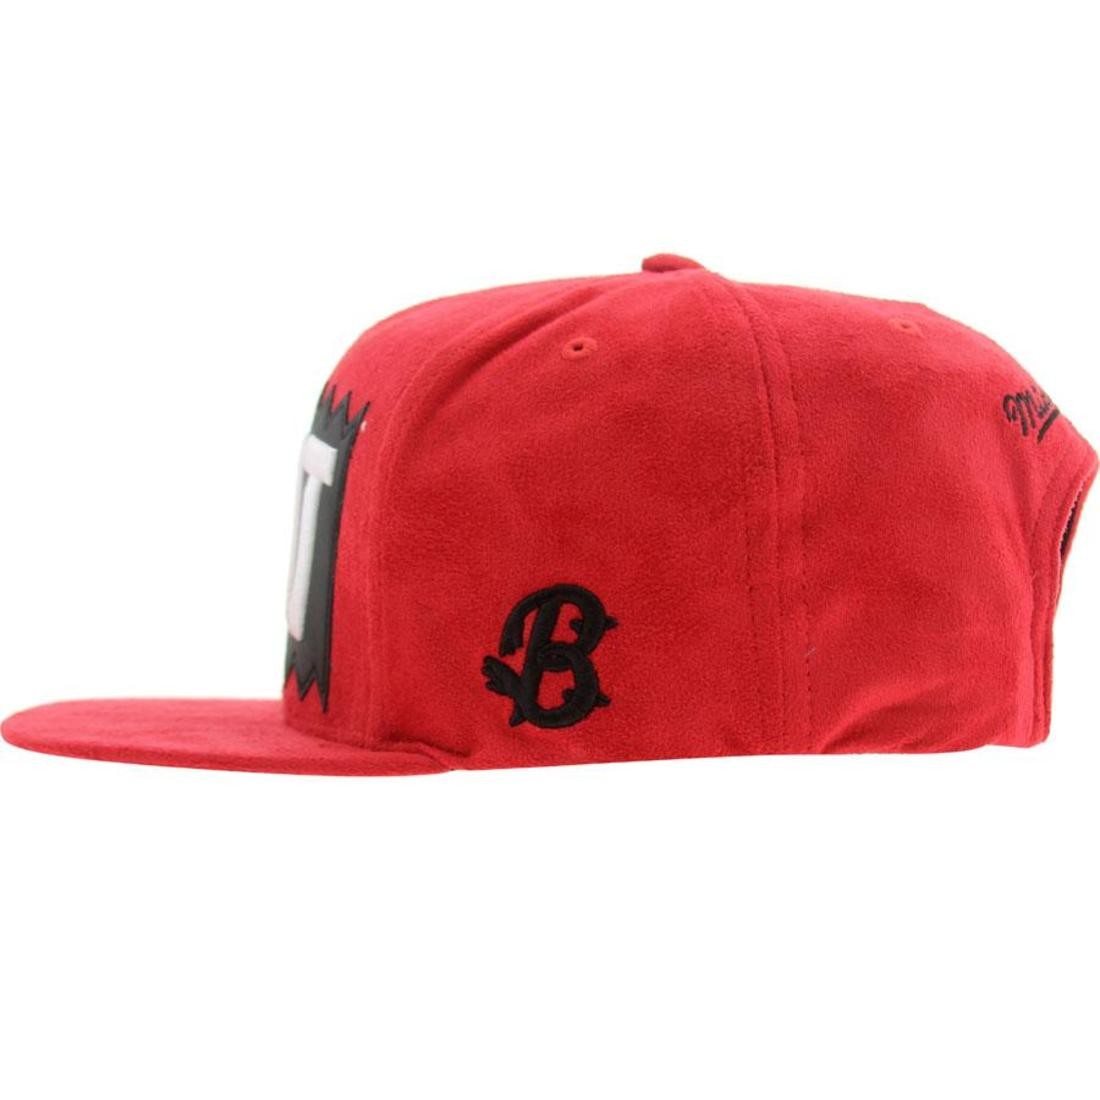 The Boston Hat- Boston Box Logo Snapback Hat